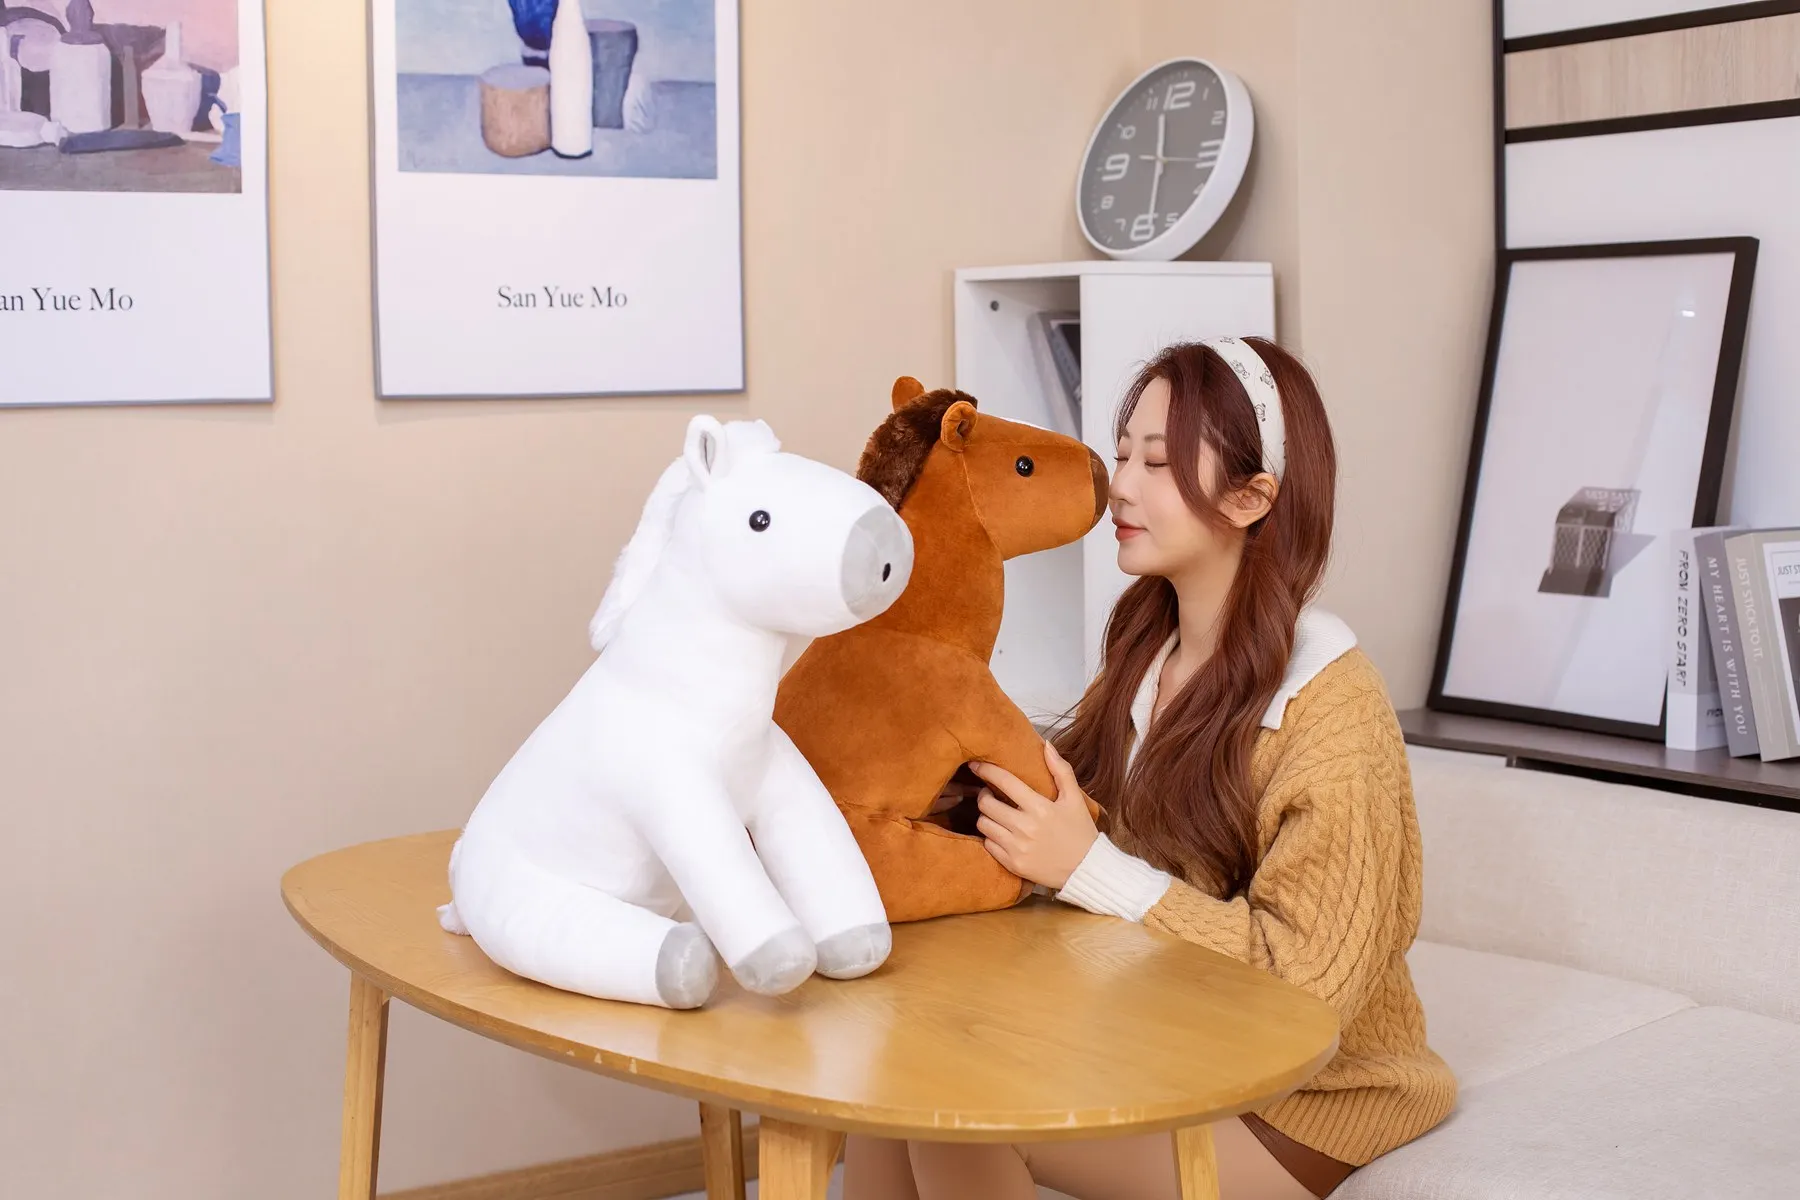 60/80cm Sitting Horse Soft Stuffed Plush Toy